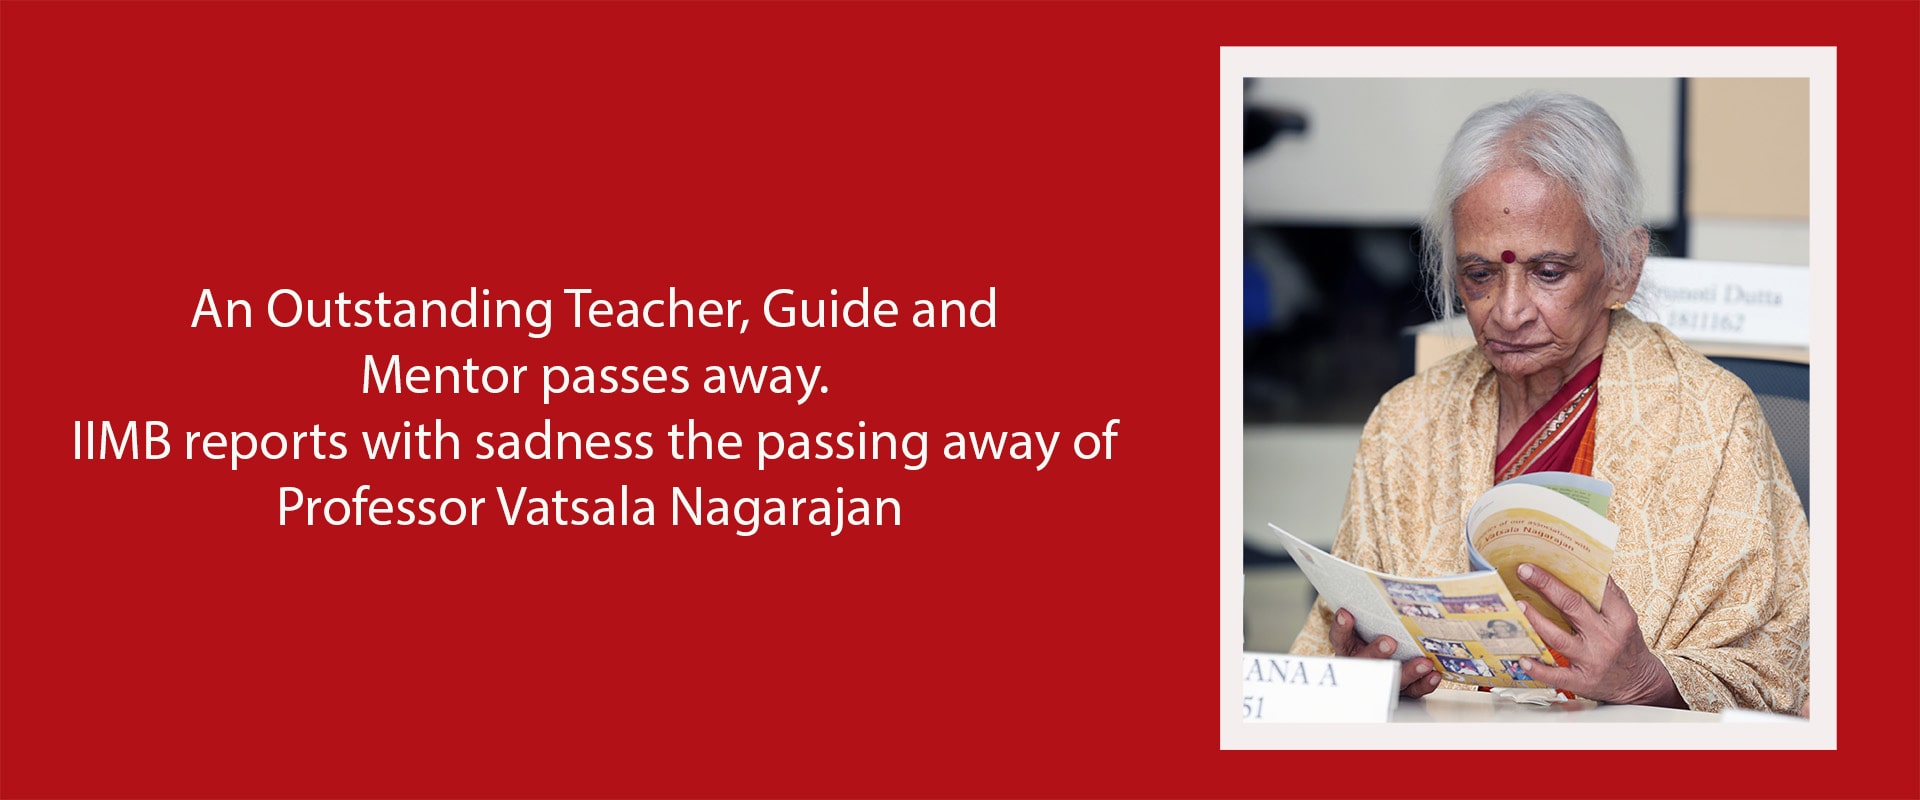 Vatsala Nagarajan outstanding Teacher Passes Way